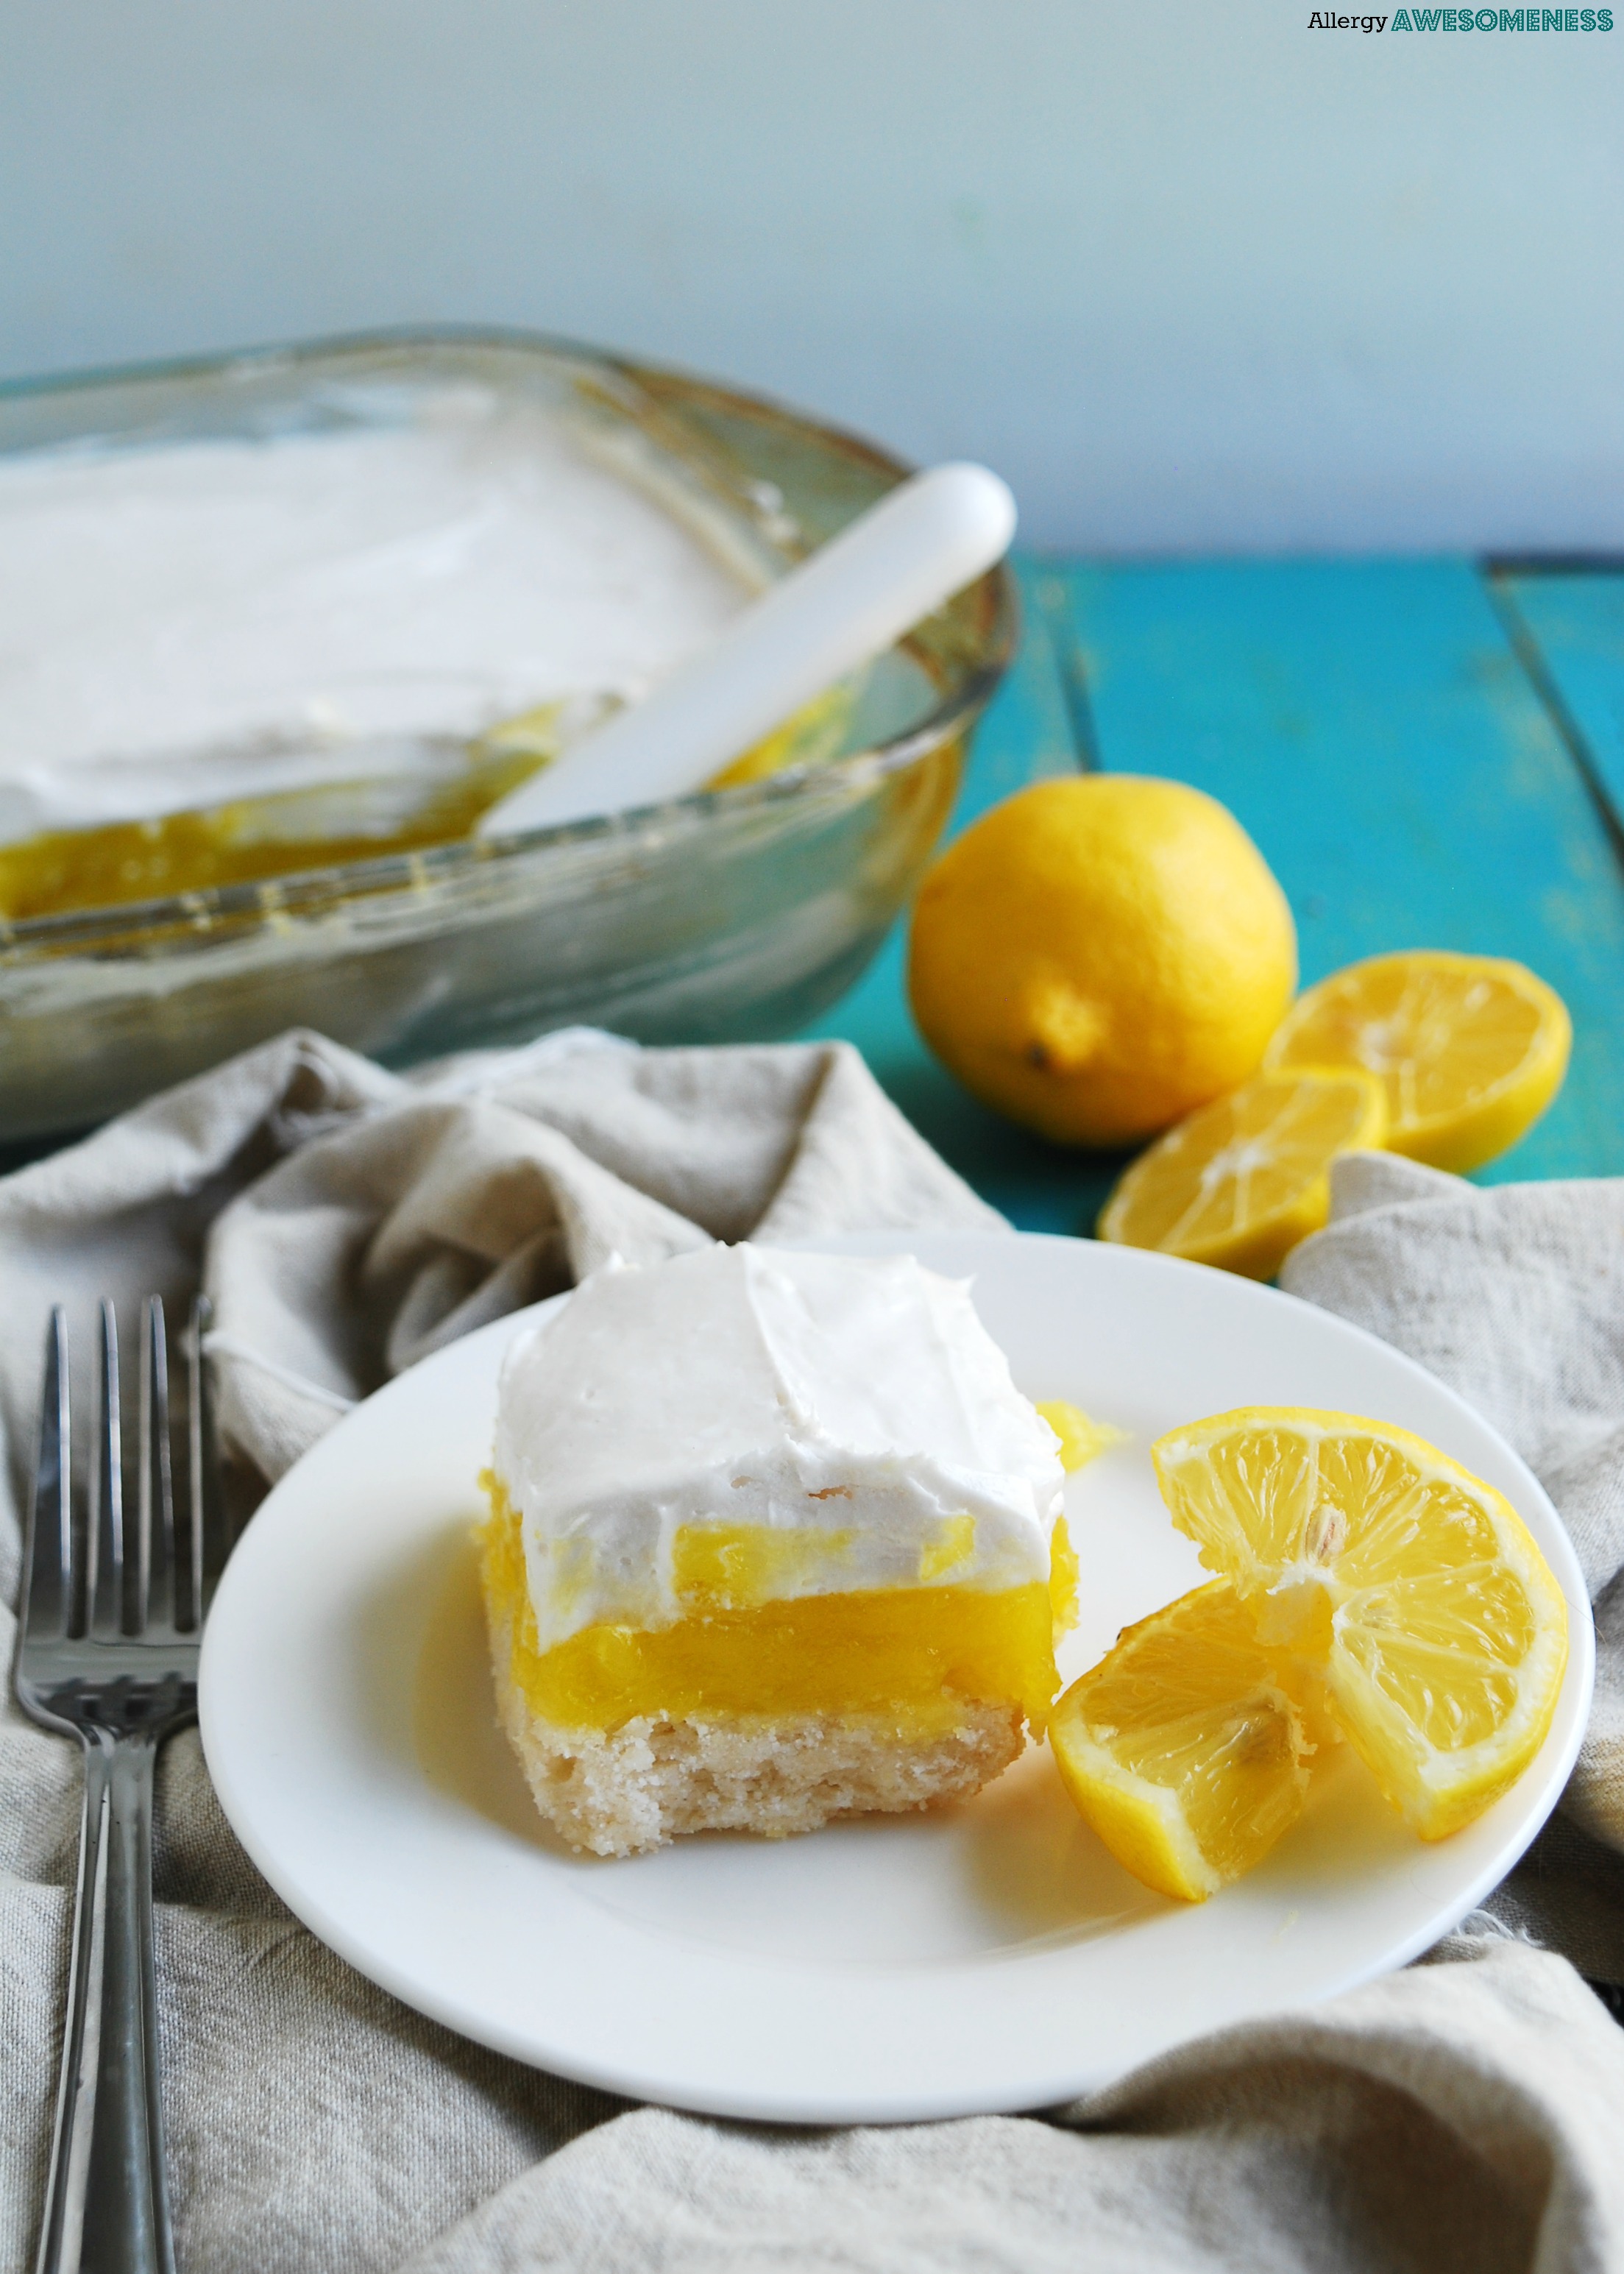 Gluten-free Lemon Pie Bars Dessert recipe by Allergy Awesomeness